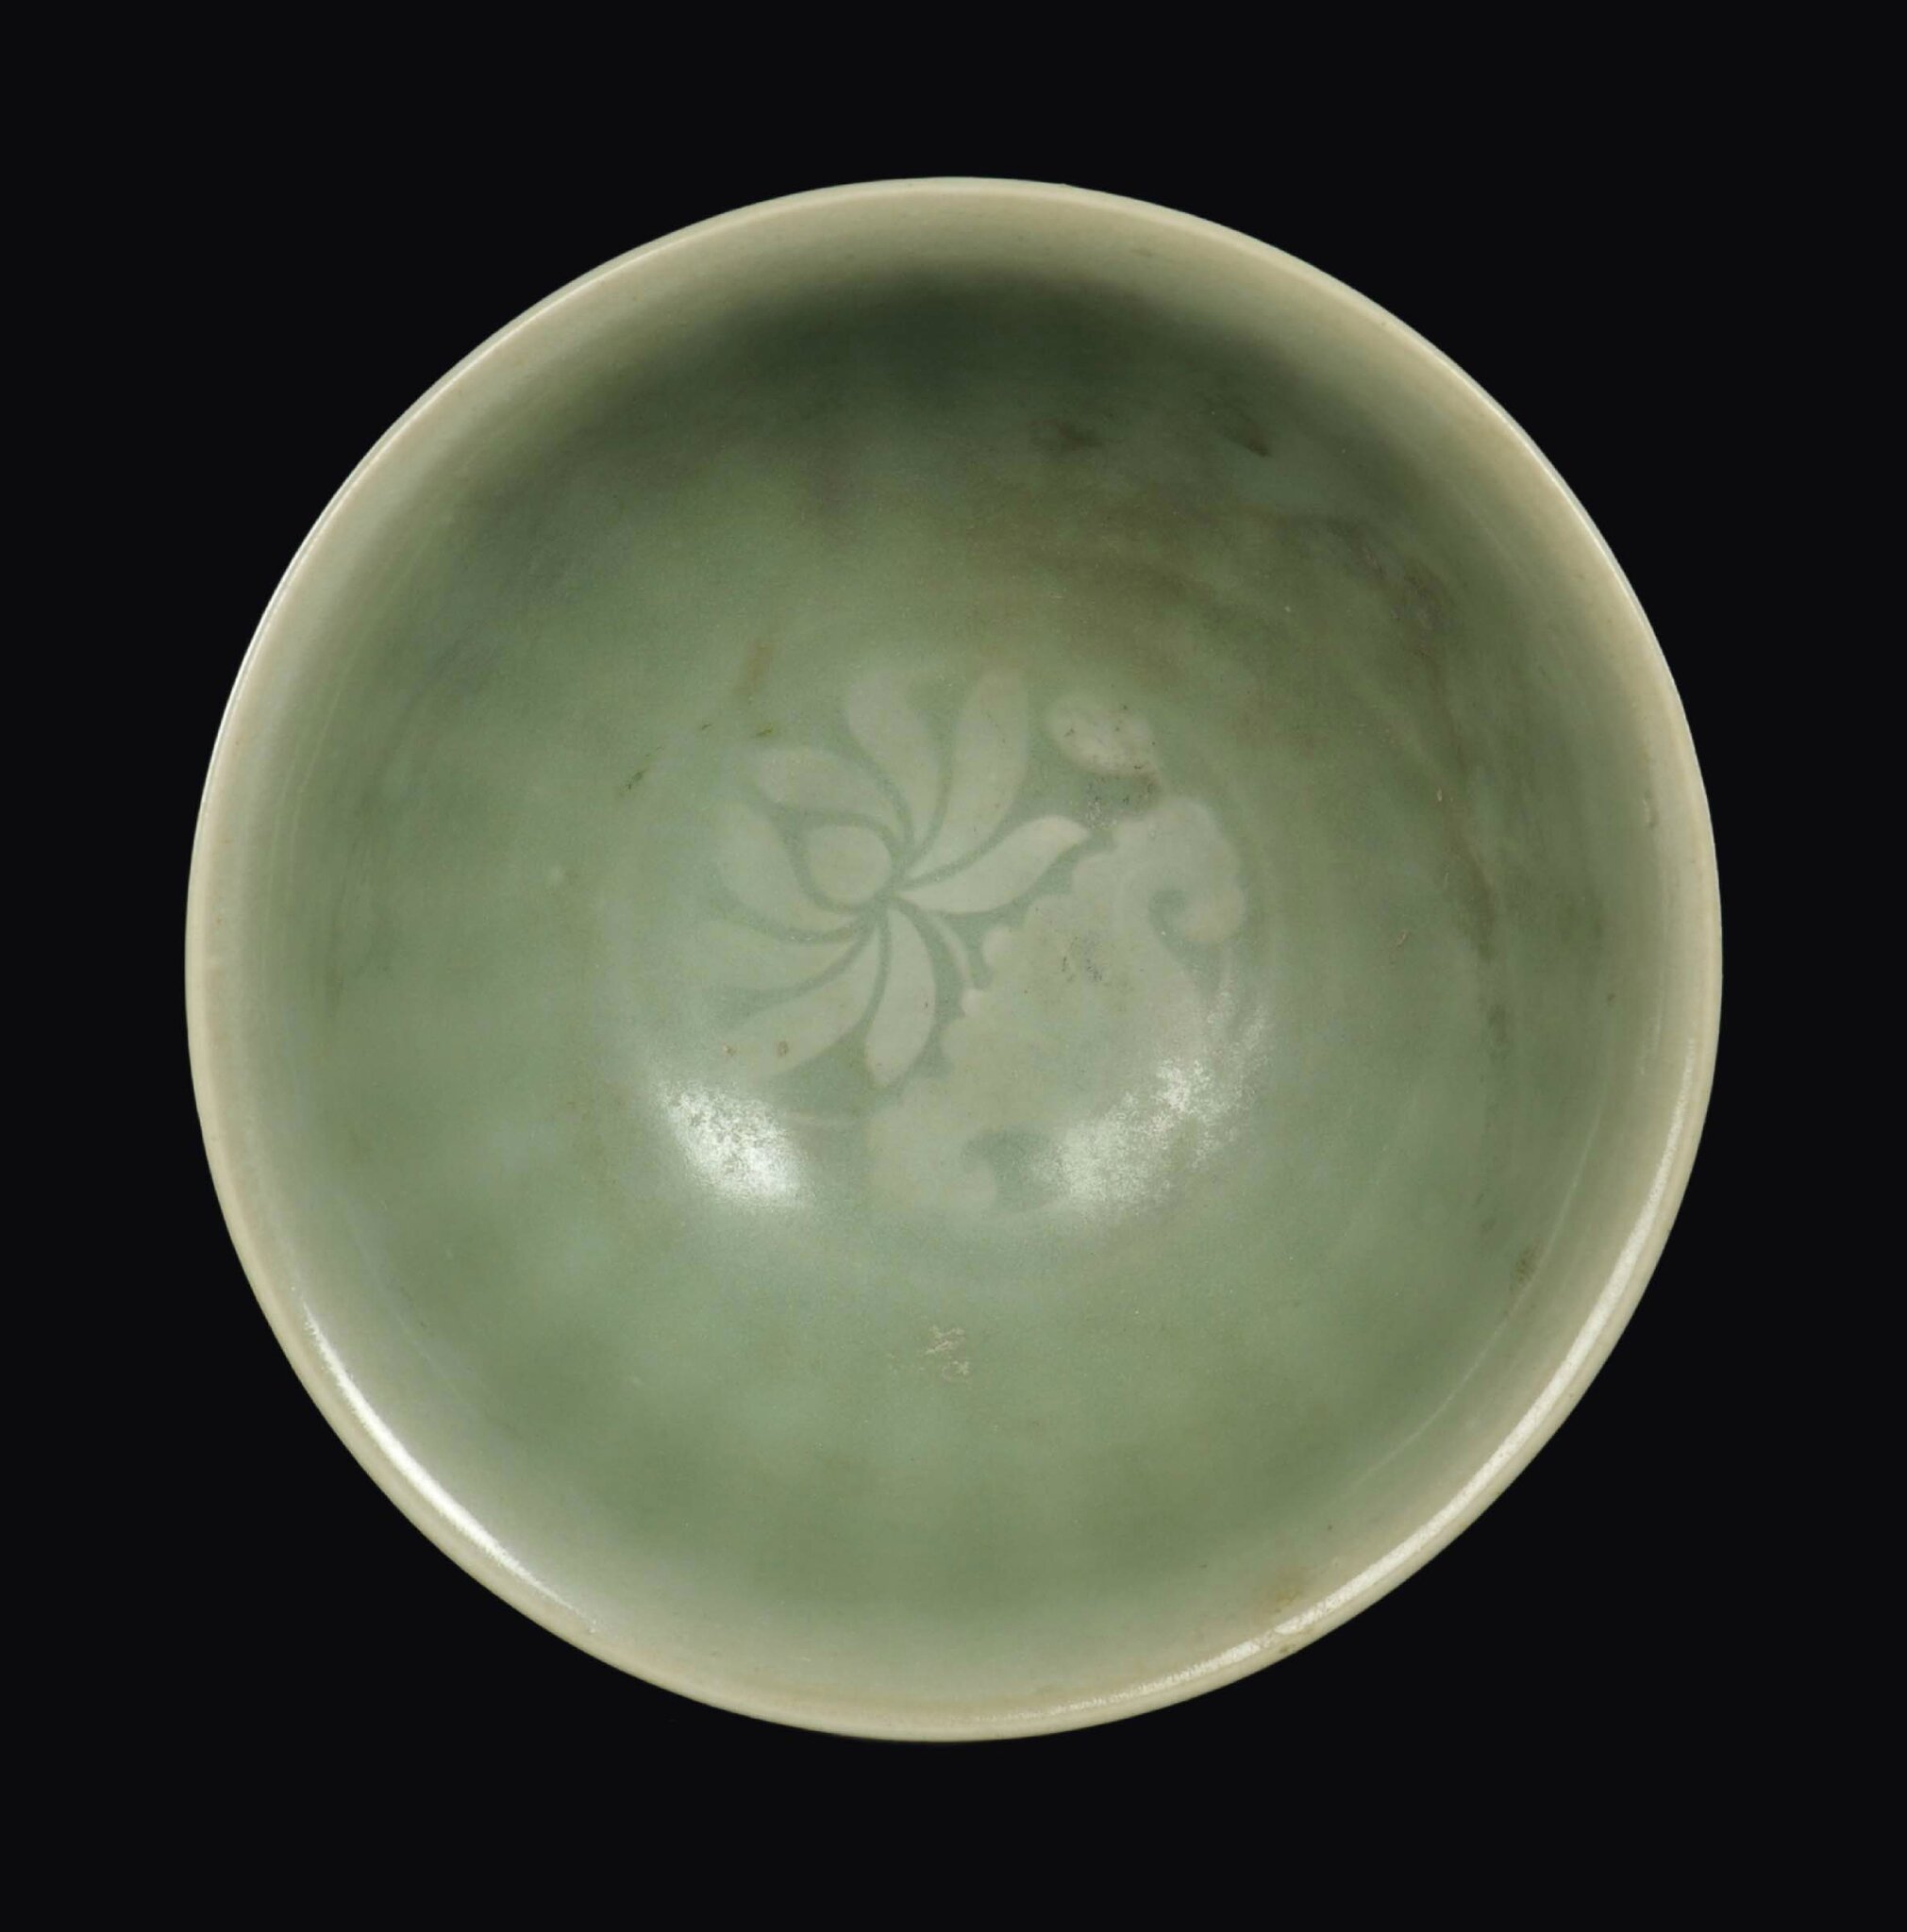 A Longquan Celadon porcelain bowl, China, Yuan Dynasty, 14th century